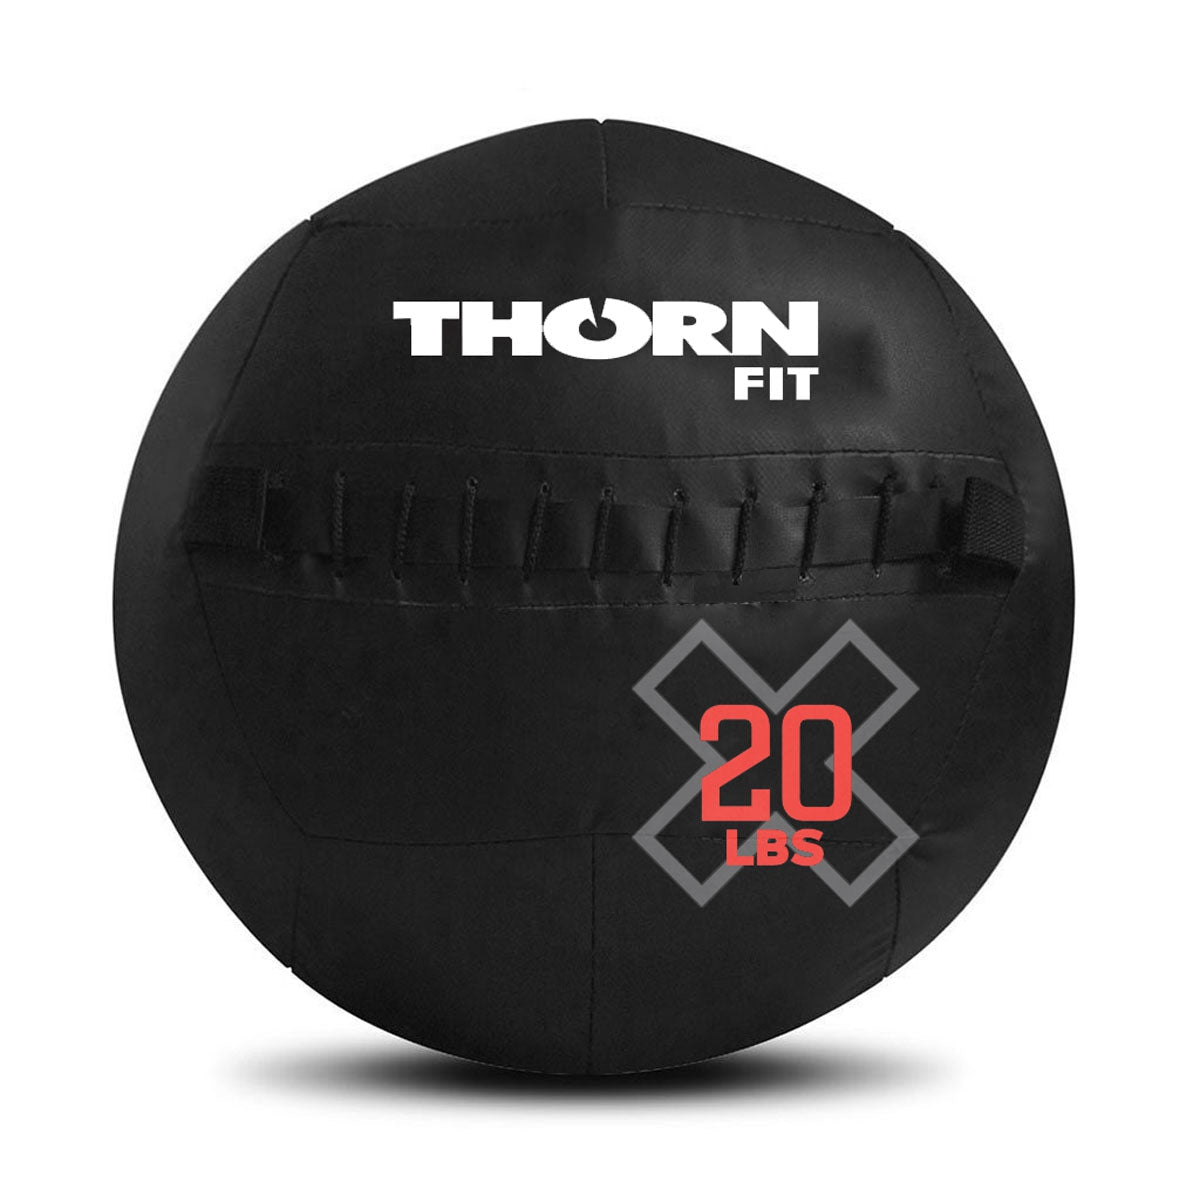 Wall-ball 20lbs -ThornFit